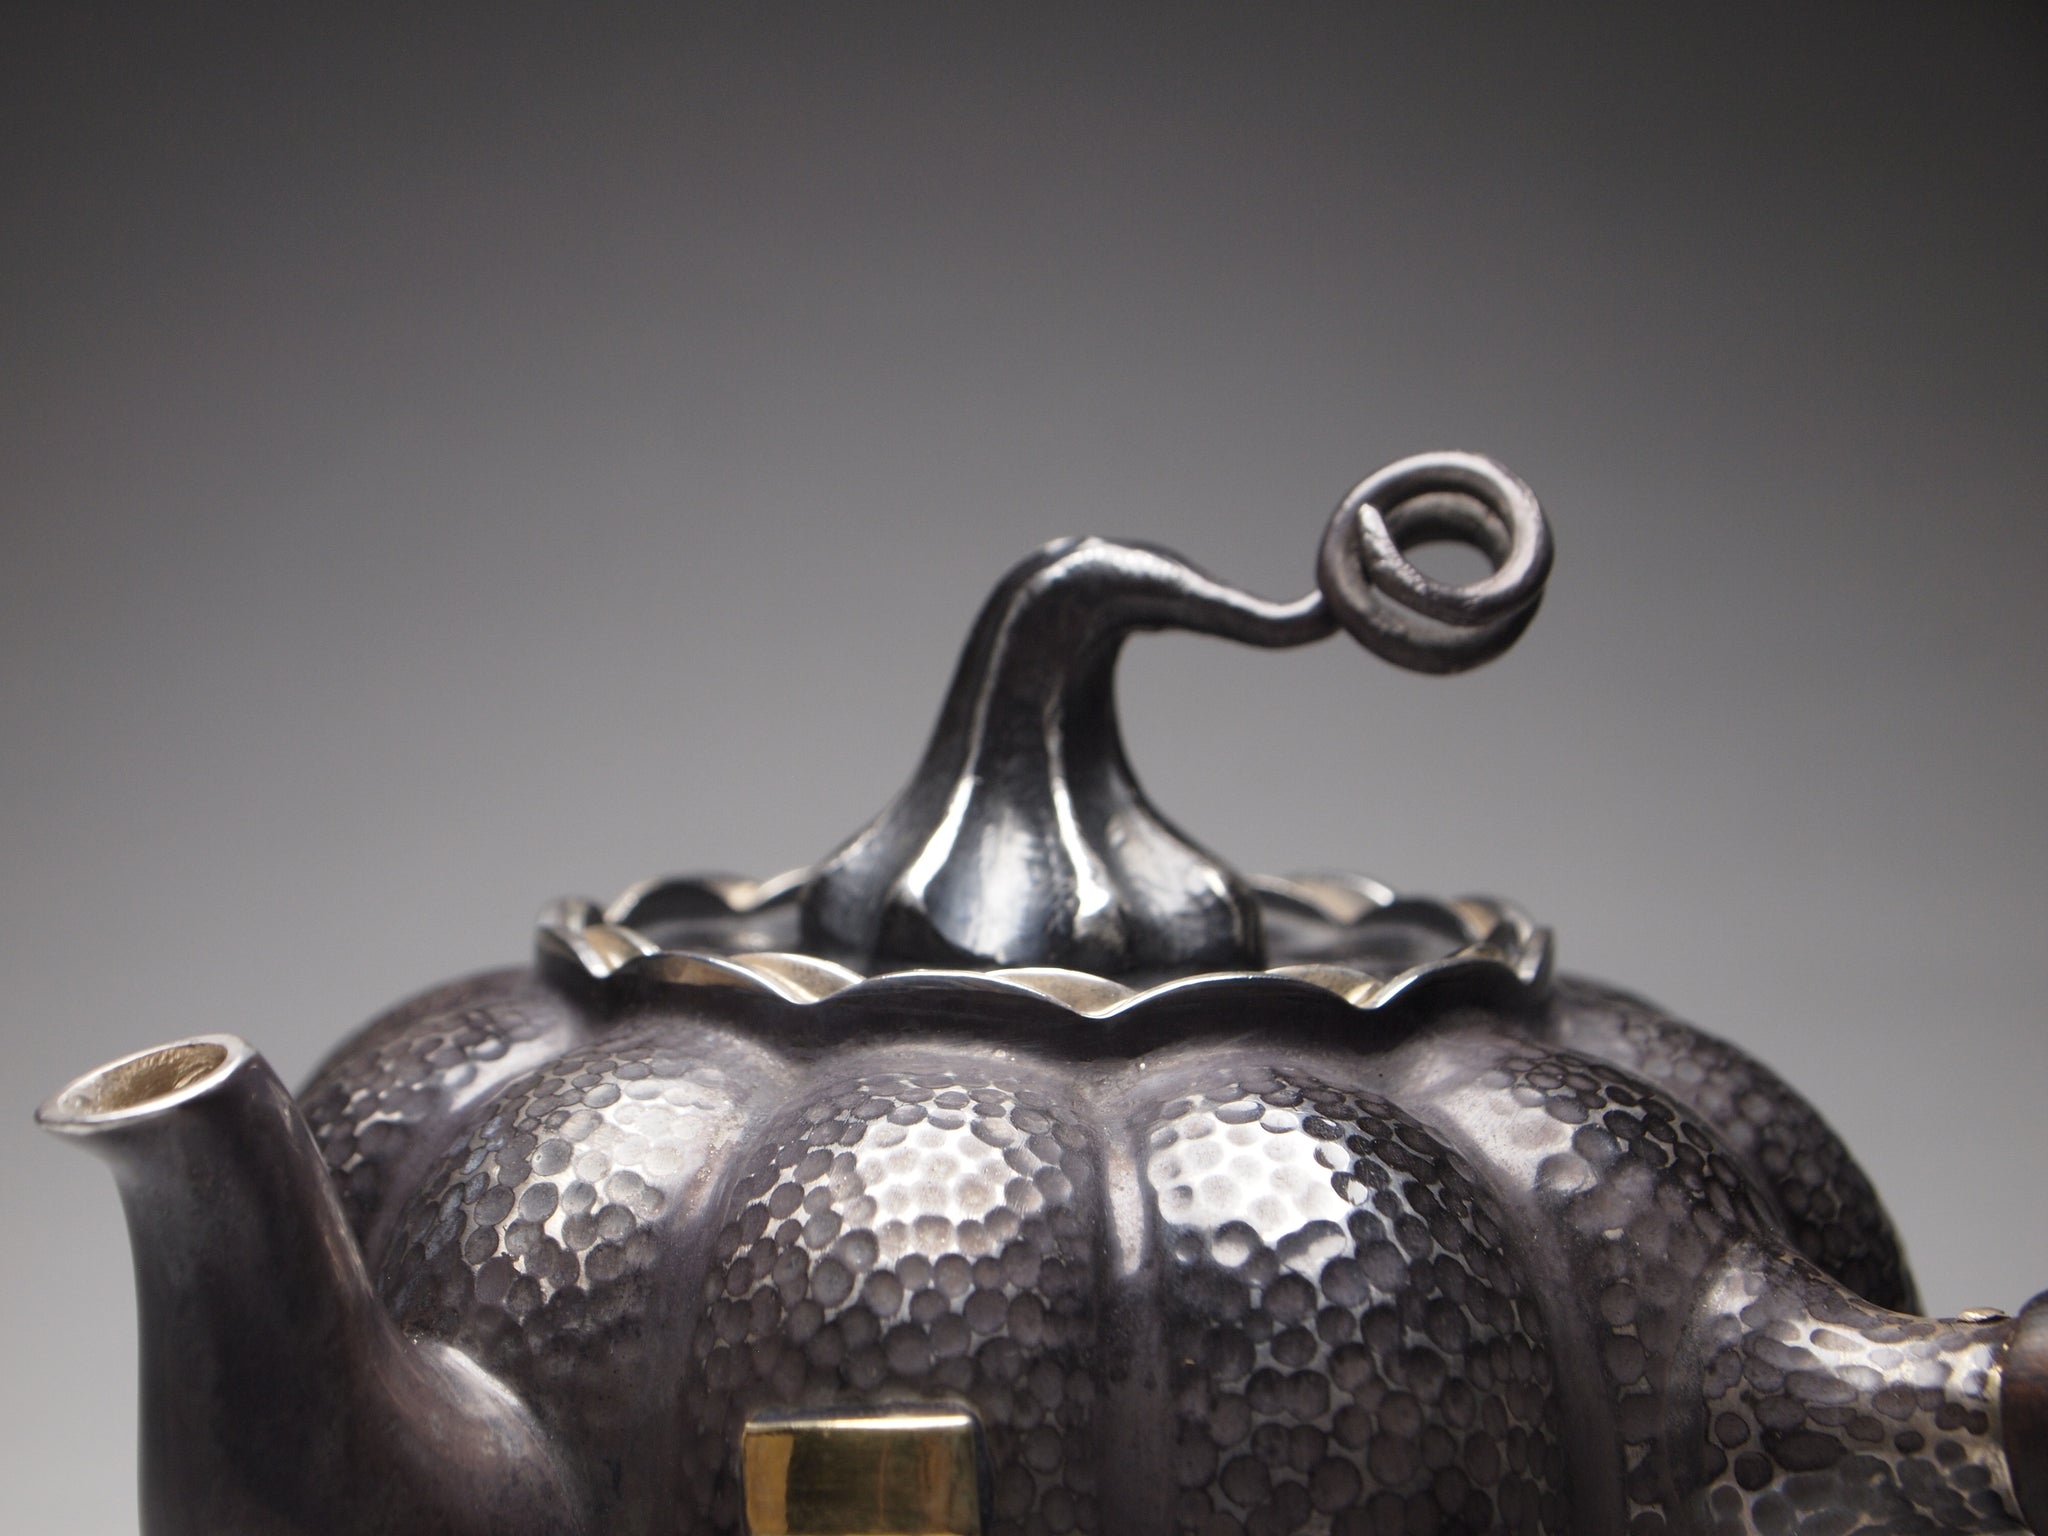 999 Pure Silver Handmade Pumpkin Side Handle Teapot, 全手工纯银999 